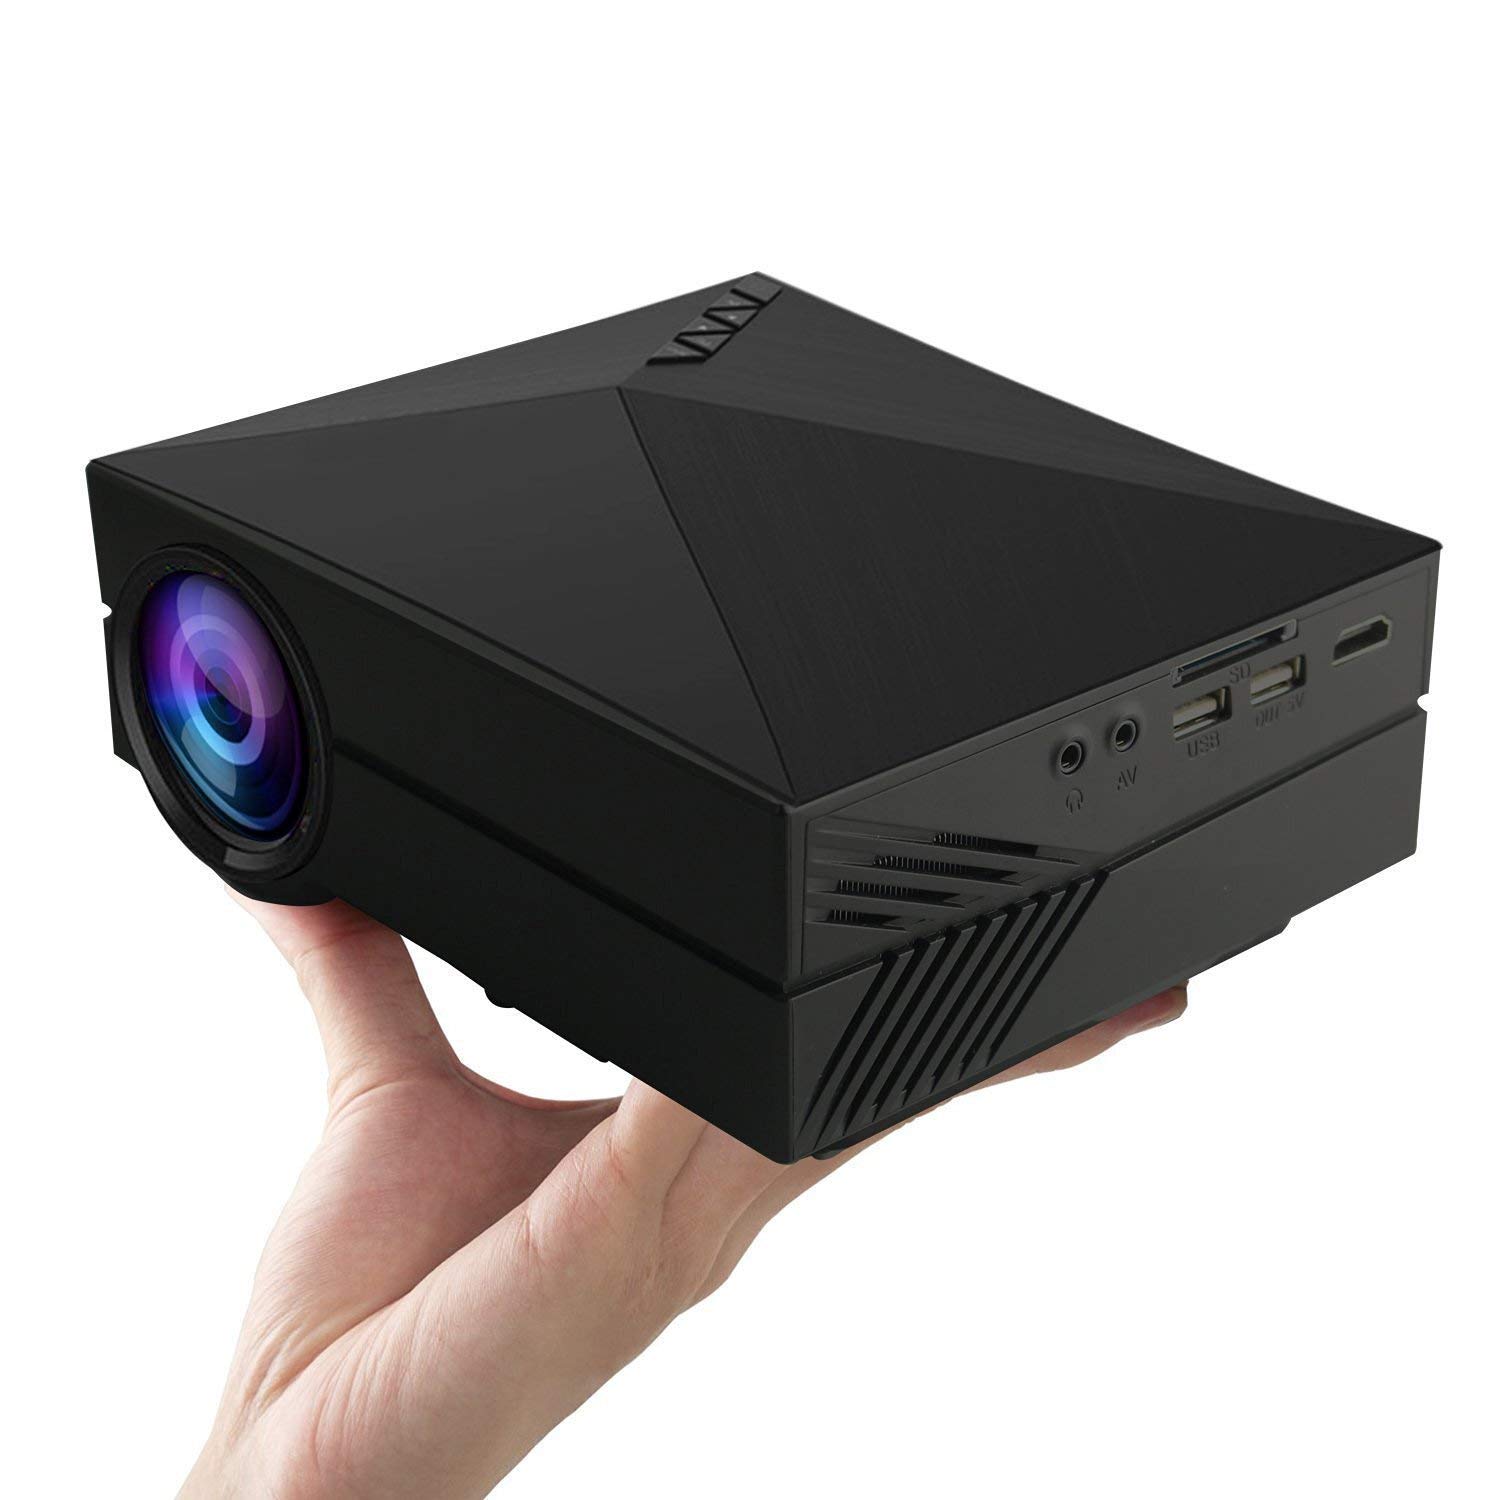 Syhonic GM60 Mini LED Video Projector